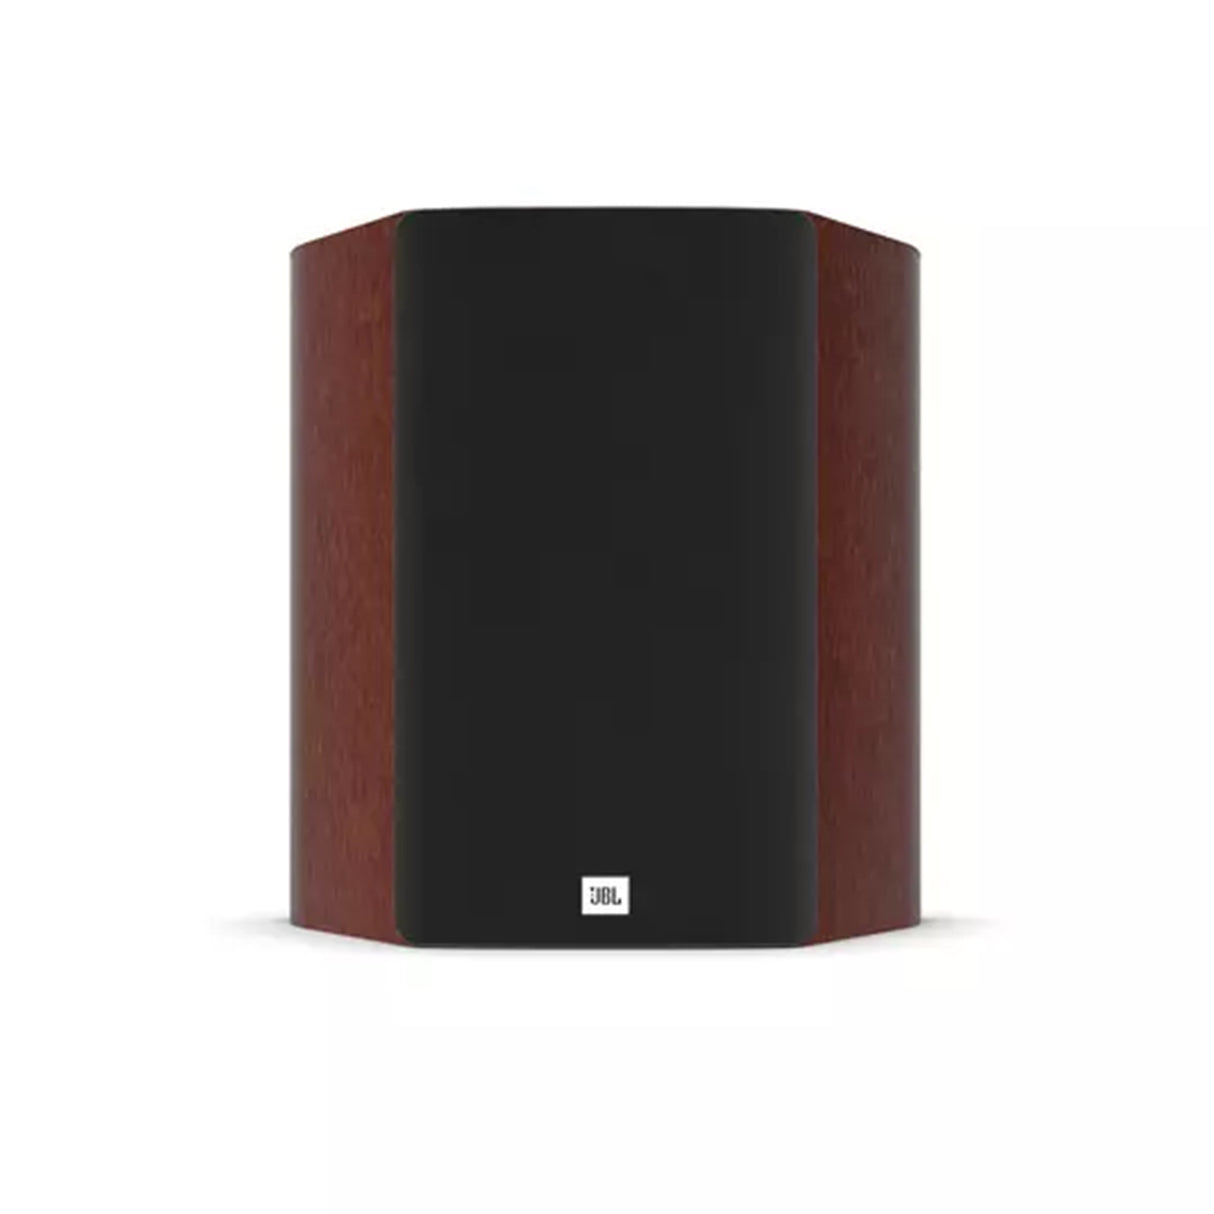 JBL Studio 610 - 2 Way 5.25 inches On-Wall Surround Speaker (Pair)